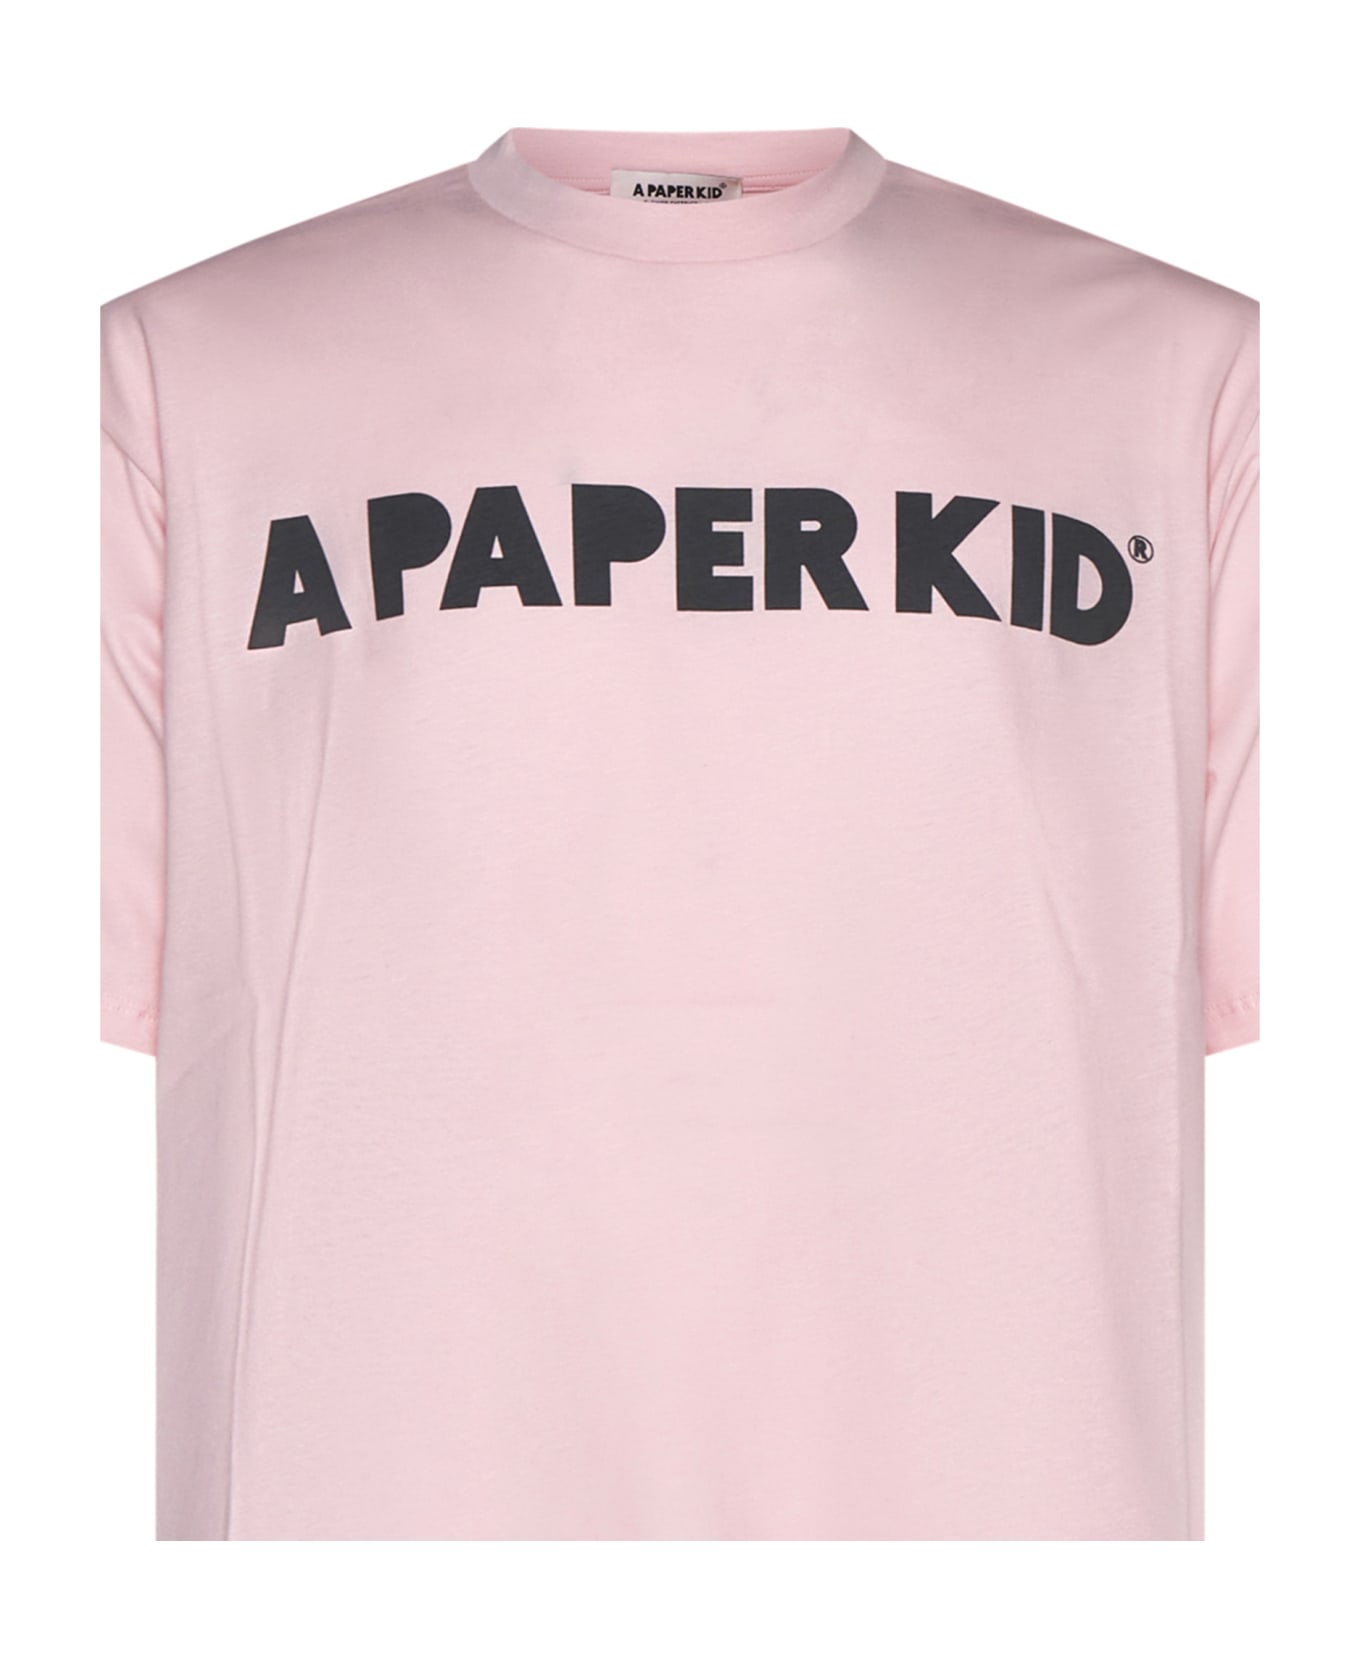 A Paper Kid T-Shirt - Pink